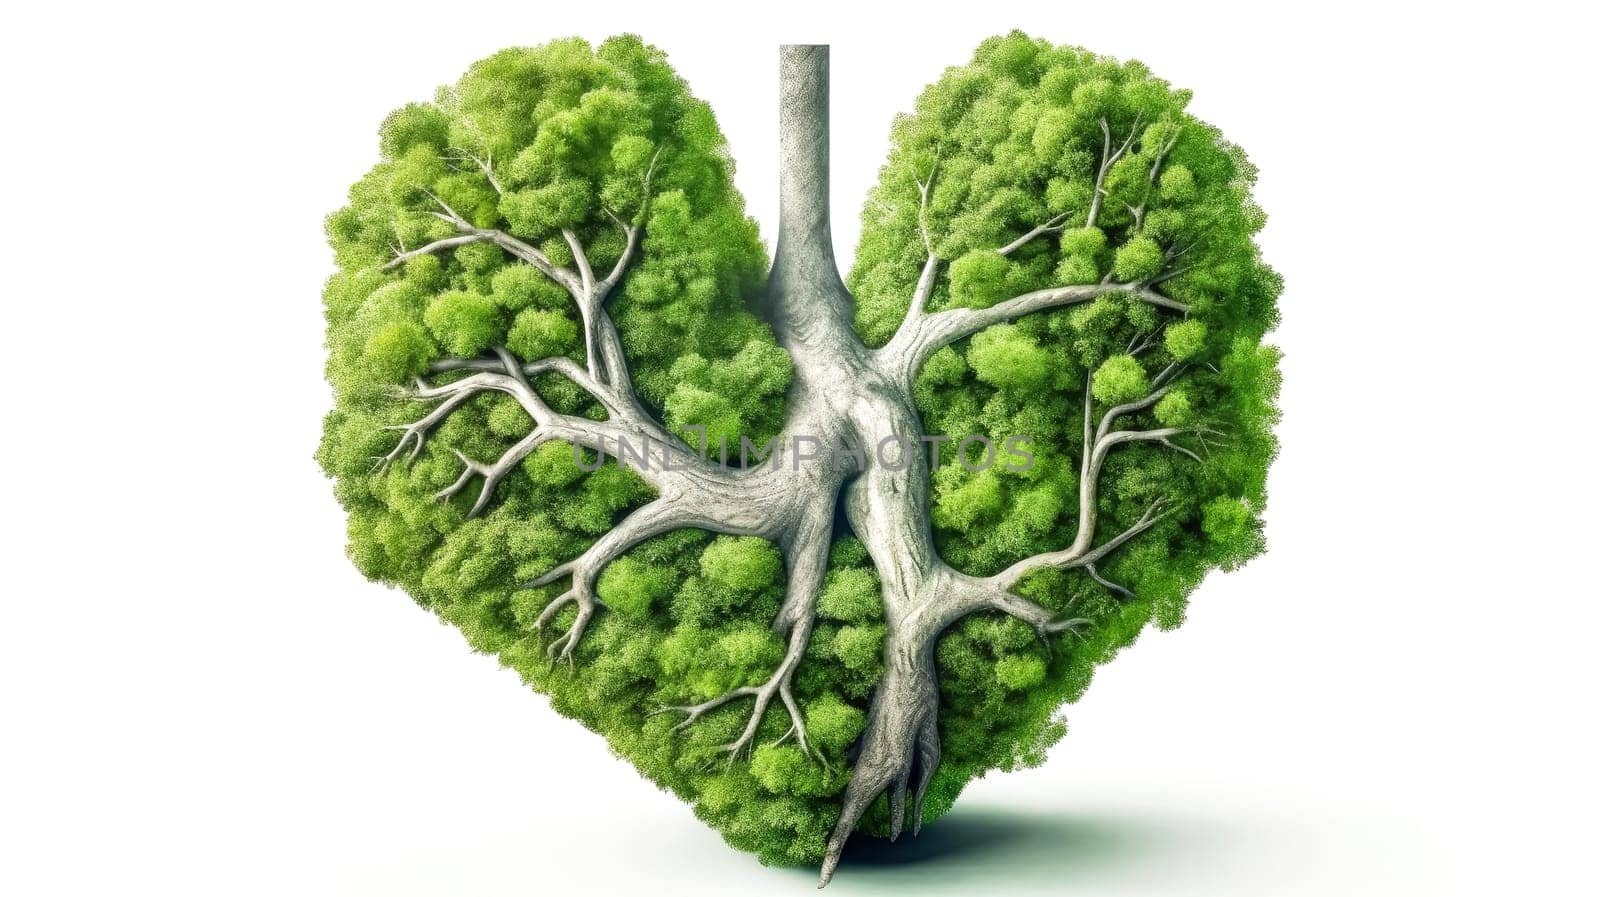 Natures heartbeat, A tree-shaped heart by Alla_Morozova93